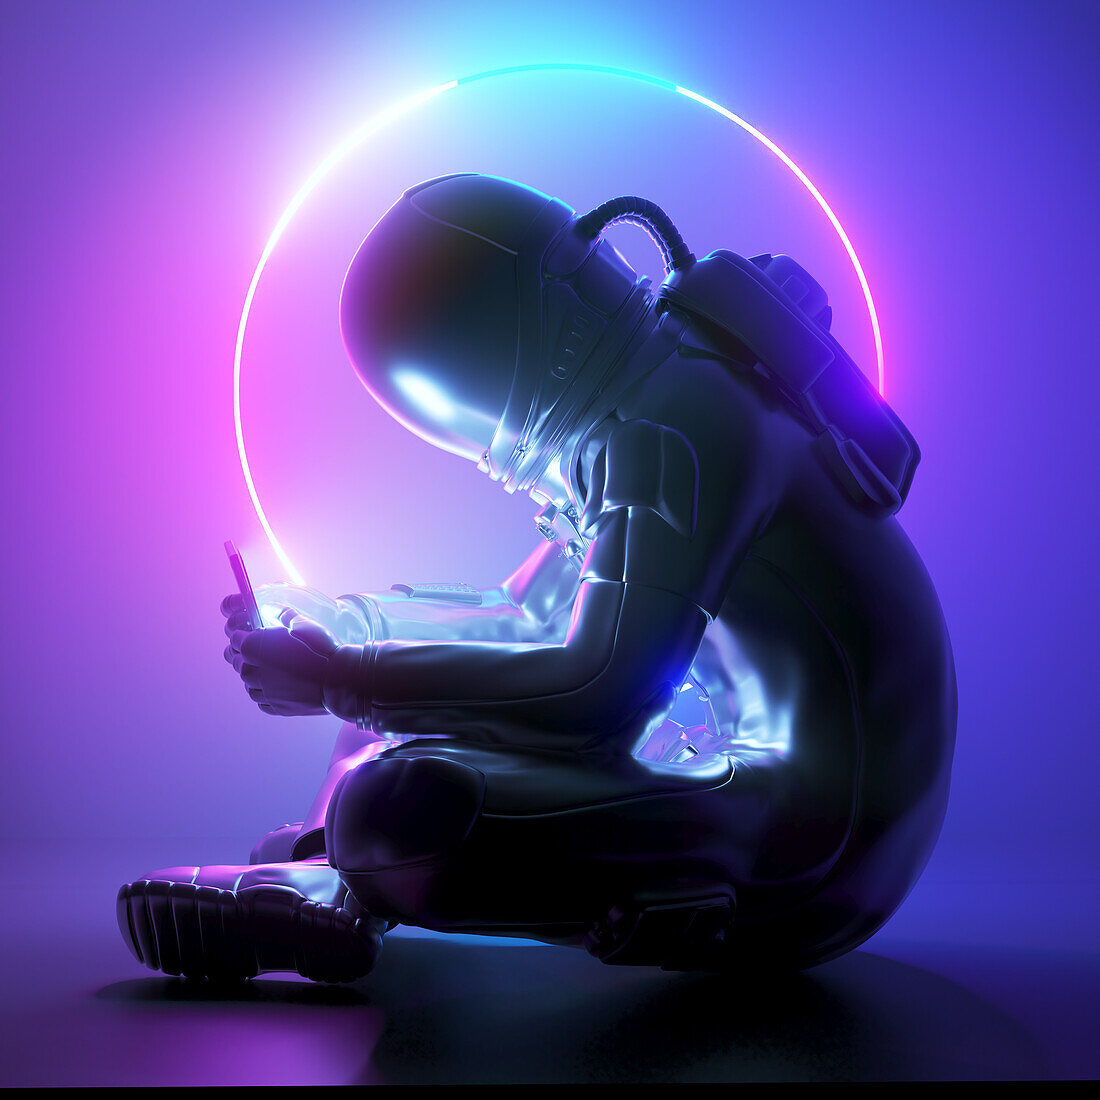 Astronaut playing on smartphone, illustration